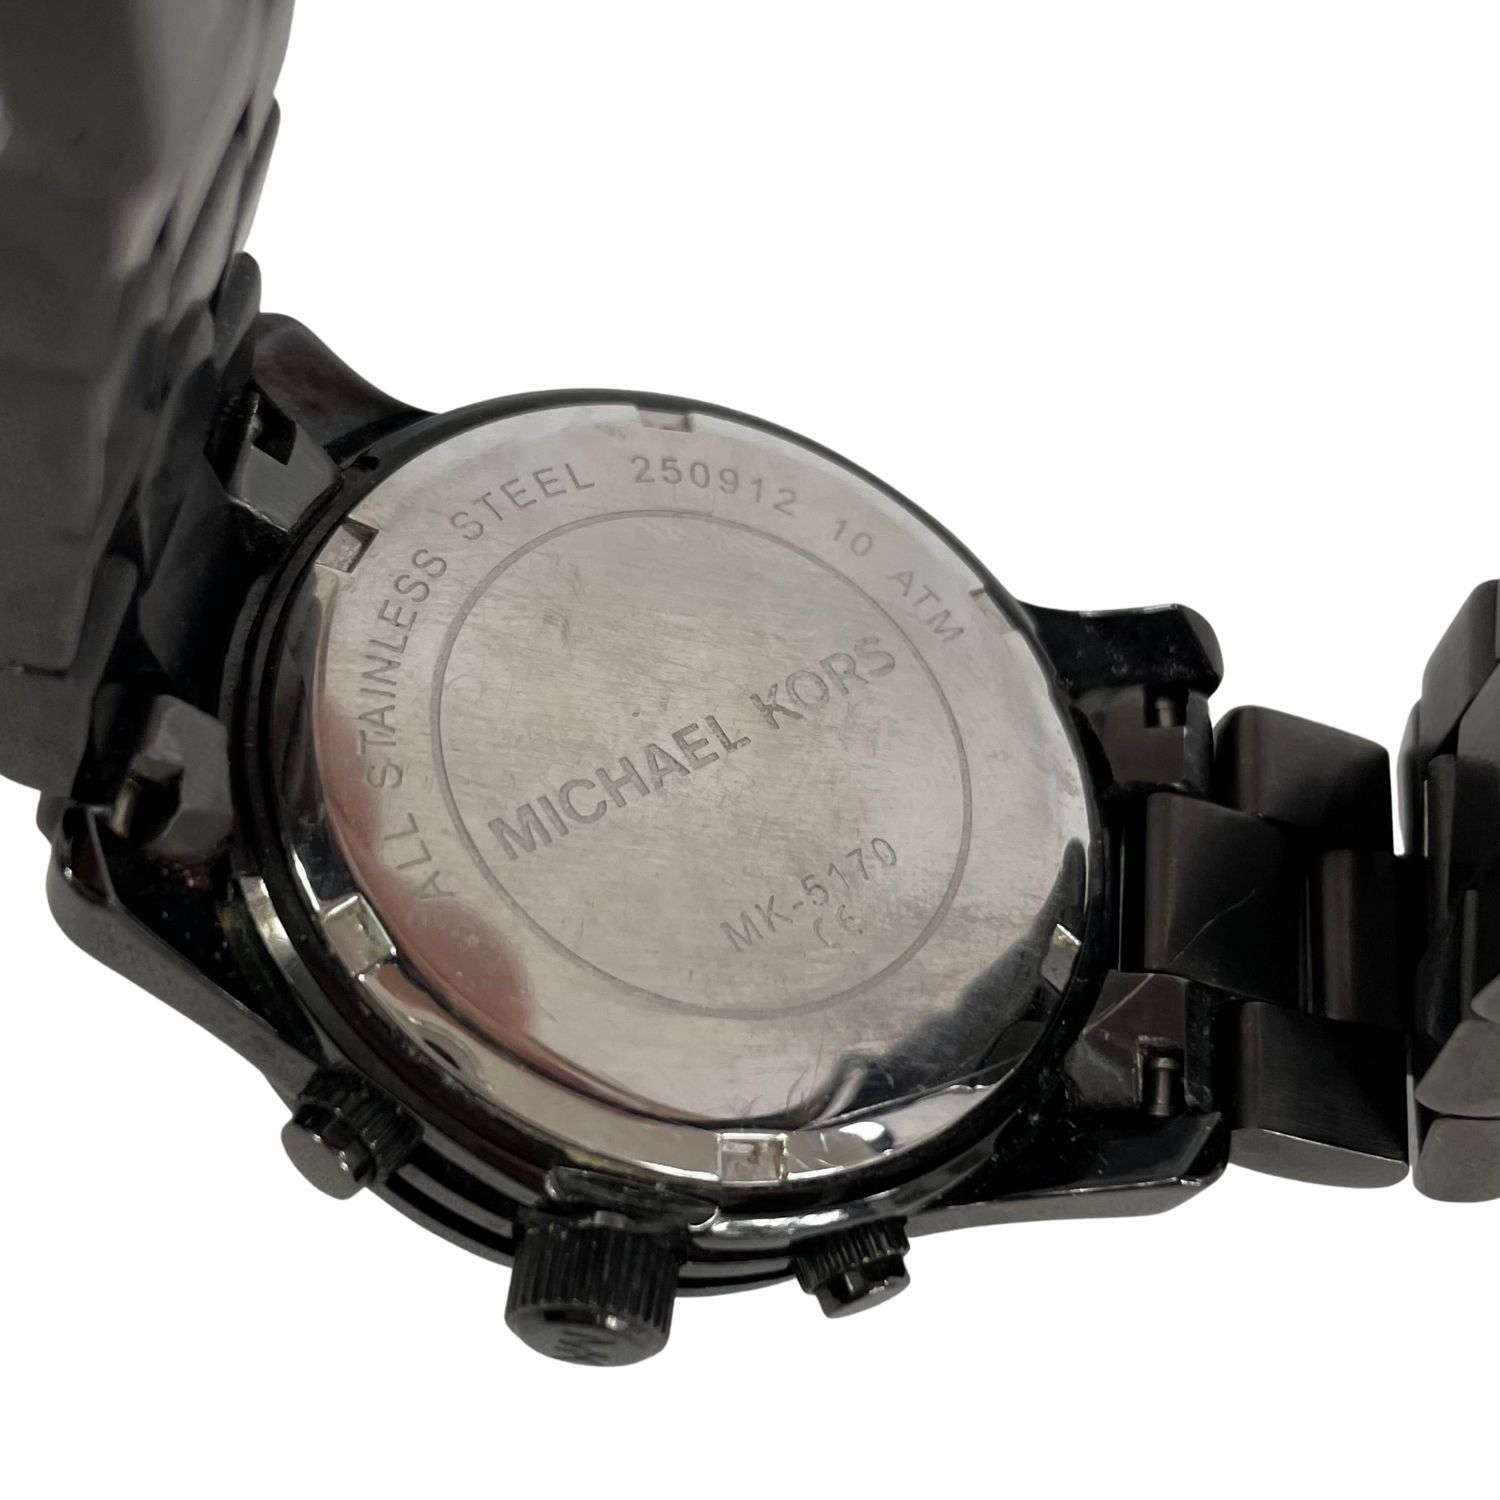 Relógio Michael Kors MK-5170